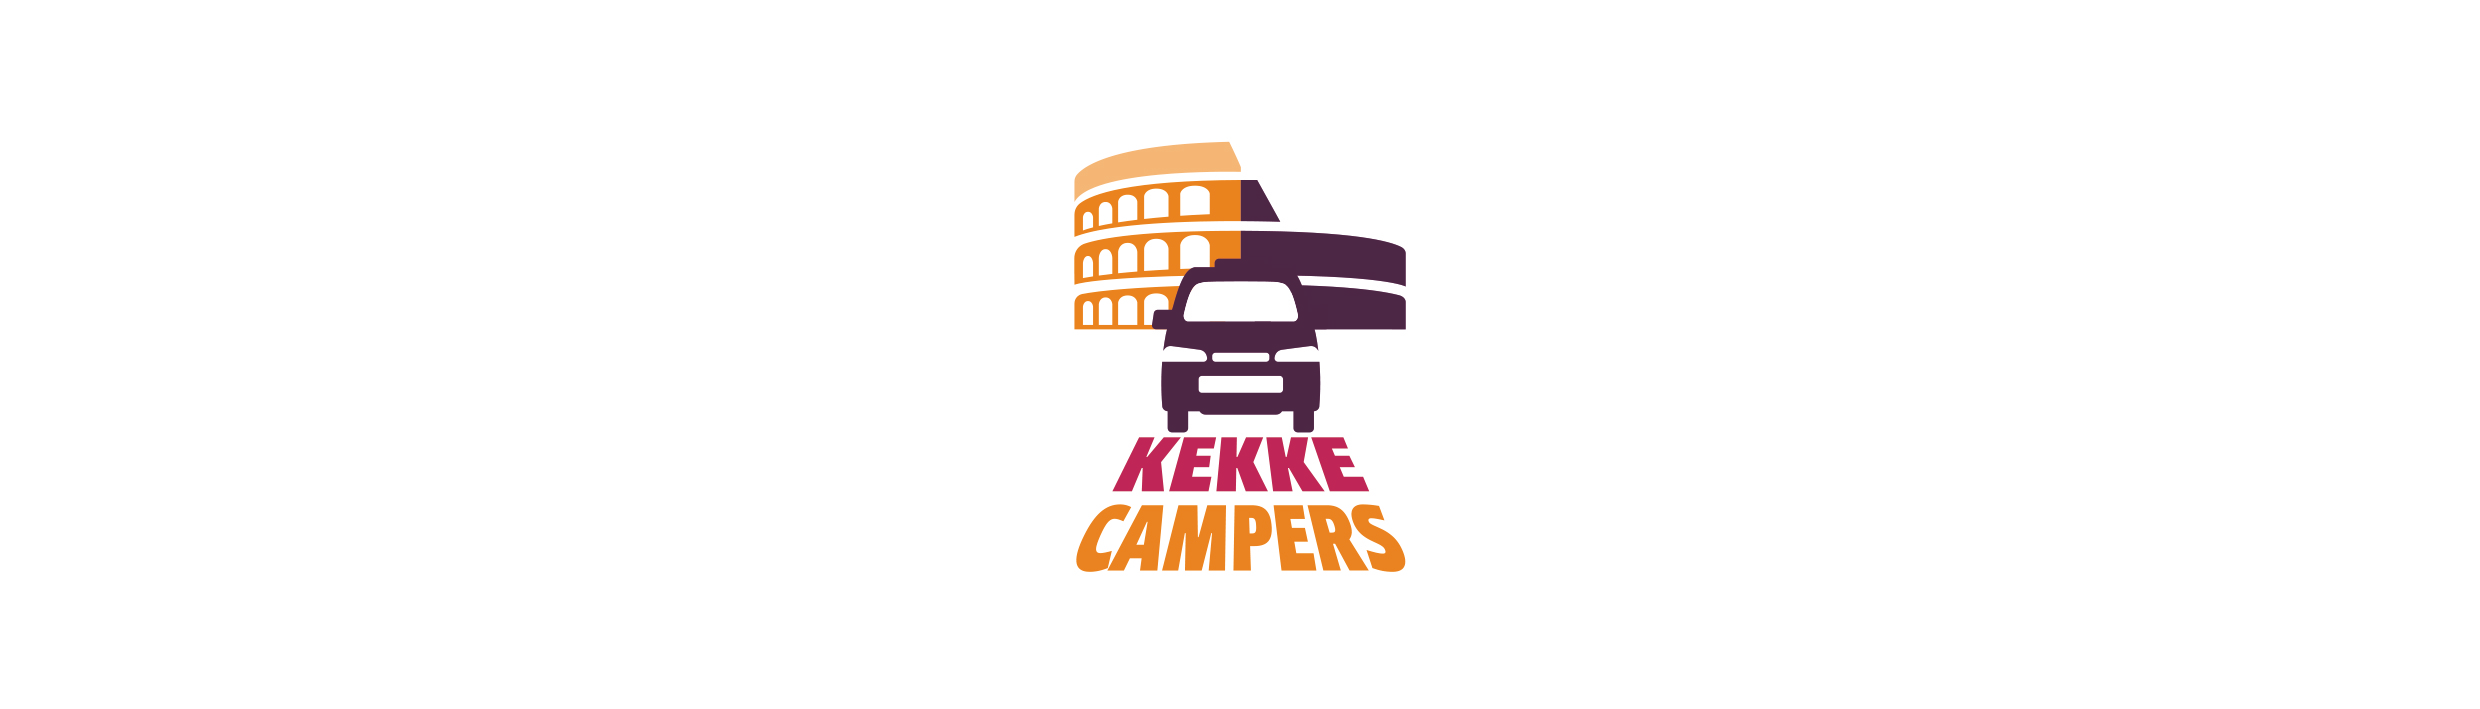 HUURVOORWAARDEN, GELDIG VANAF 1 DECEMBER 2016 Kekke Campers is een initiatief van Blyxum B.V., hierna genoemd Kekke Campers. 1 VOERTUIG 1.